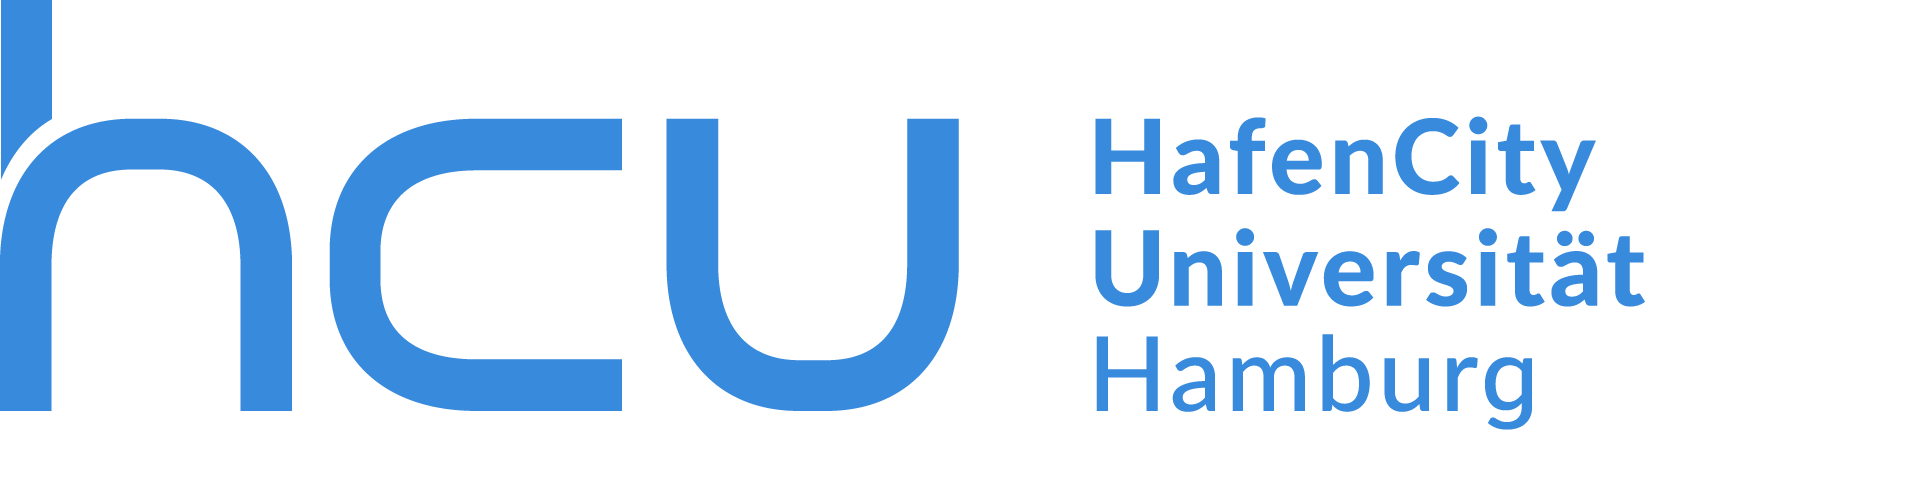 Hafencity University Hamburg